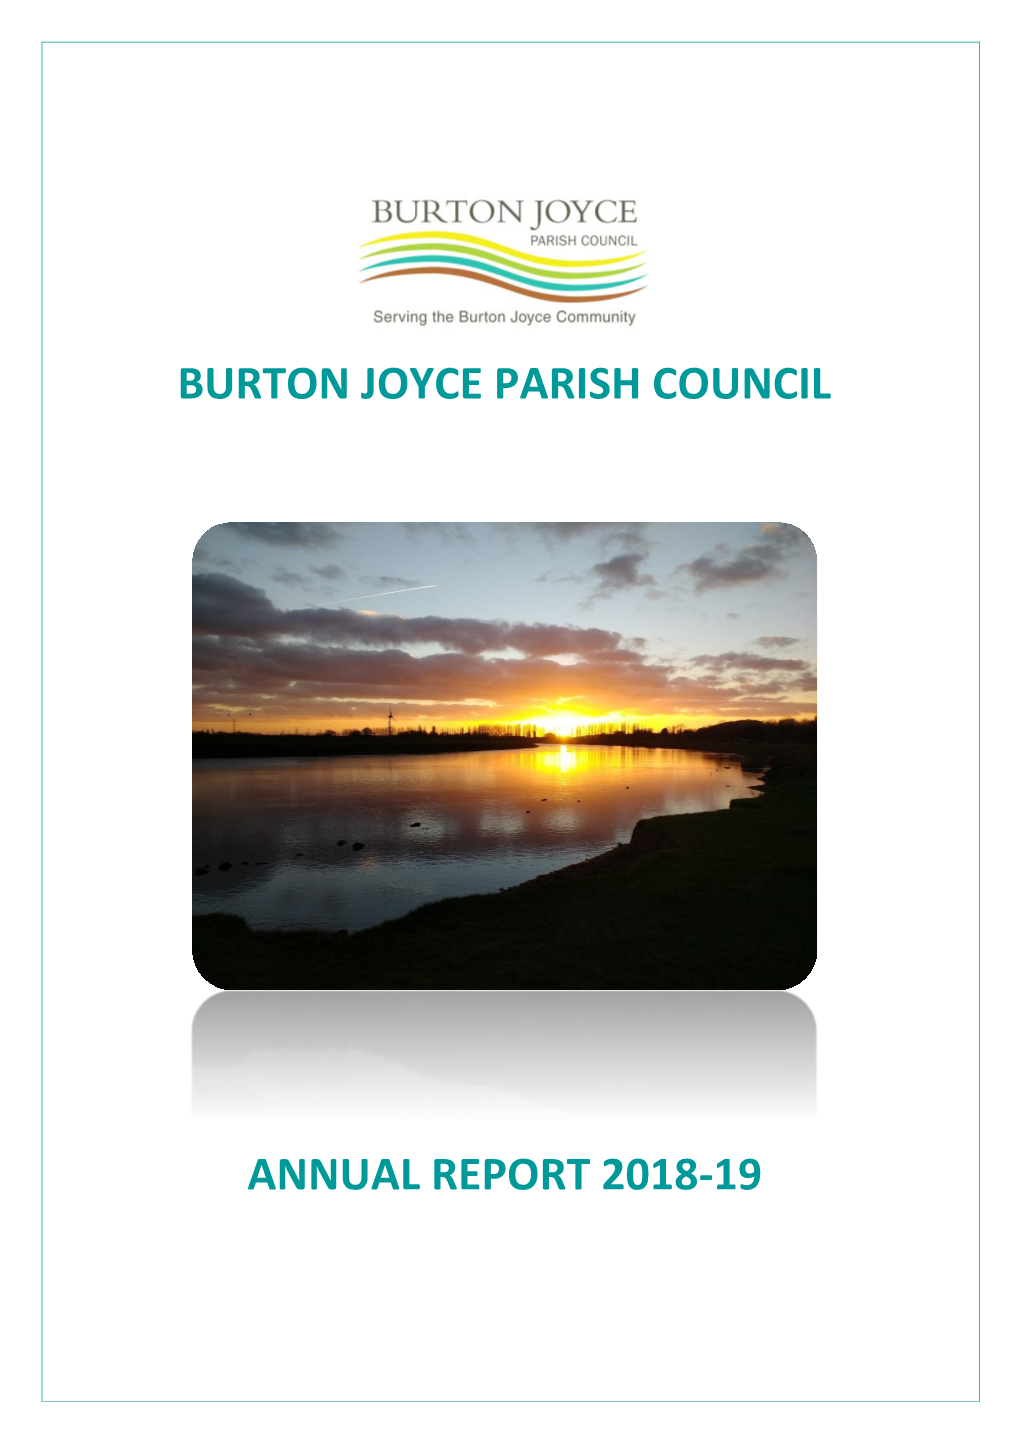 Burton Joyce Parish Council Annual Report 2018-19